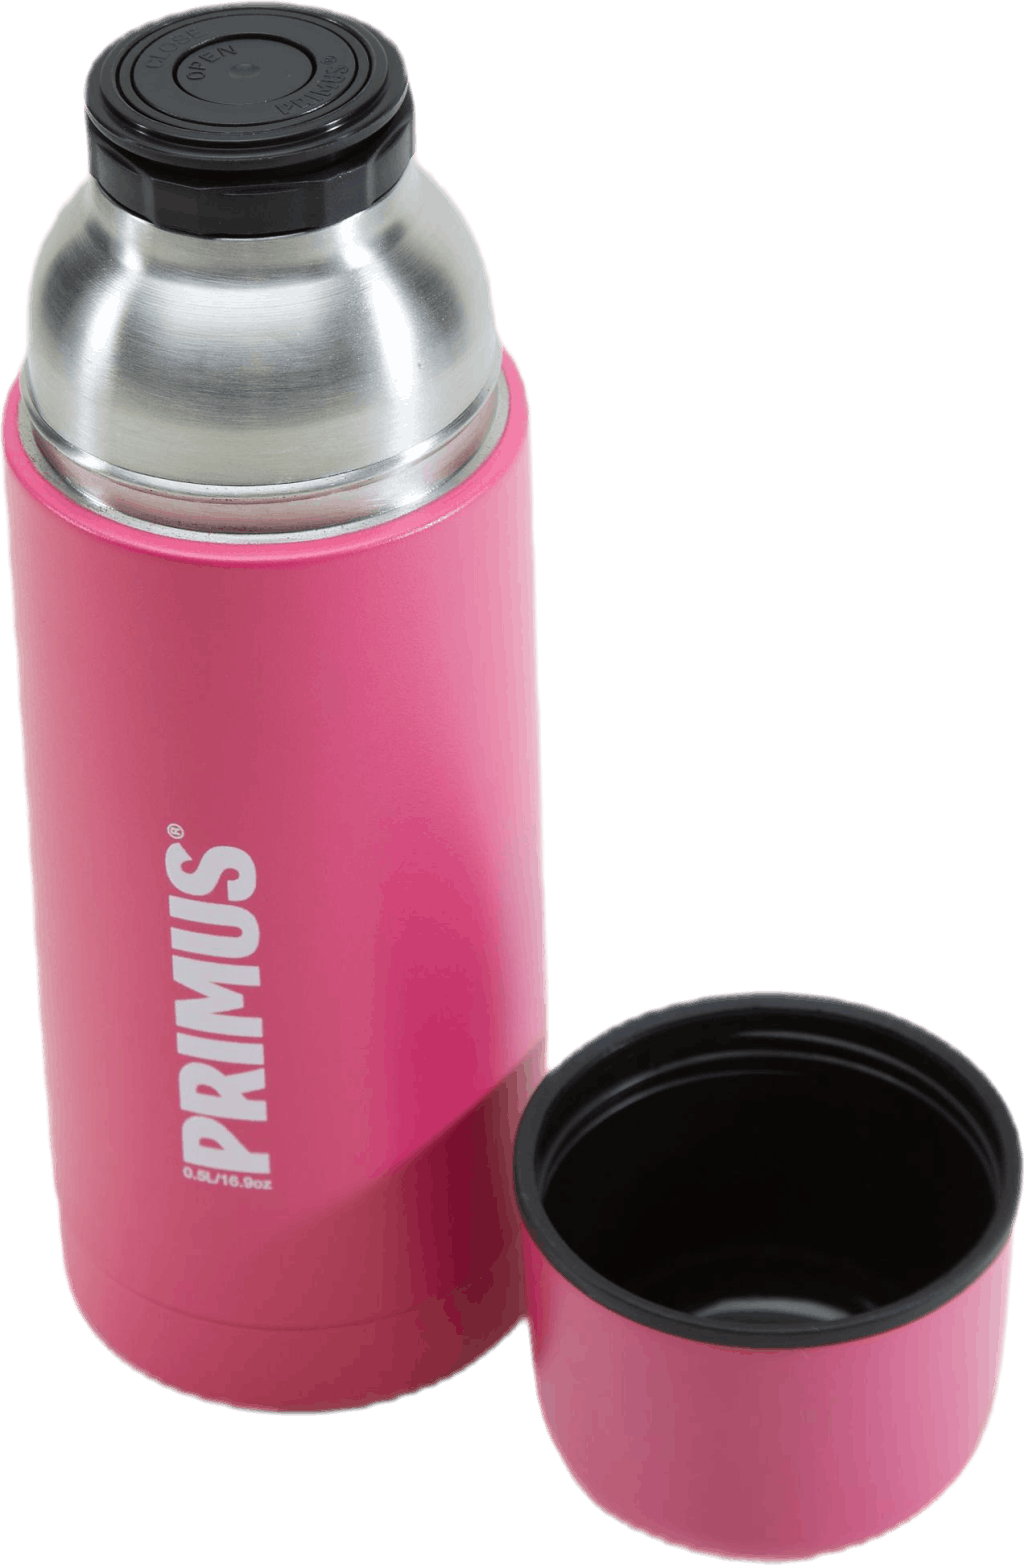 Vacuum Bottle 0.5 Pink